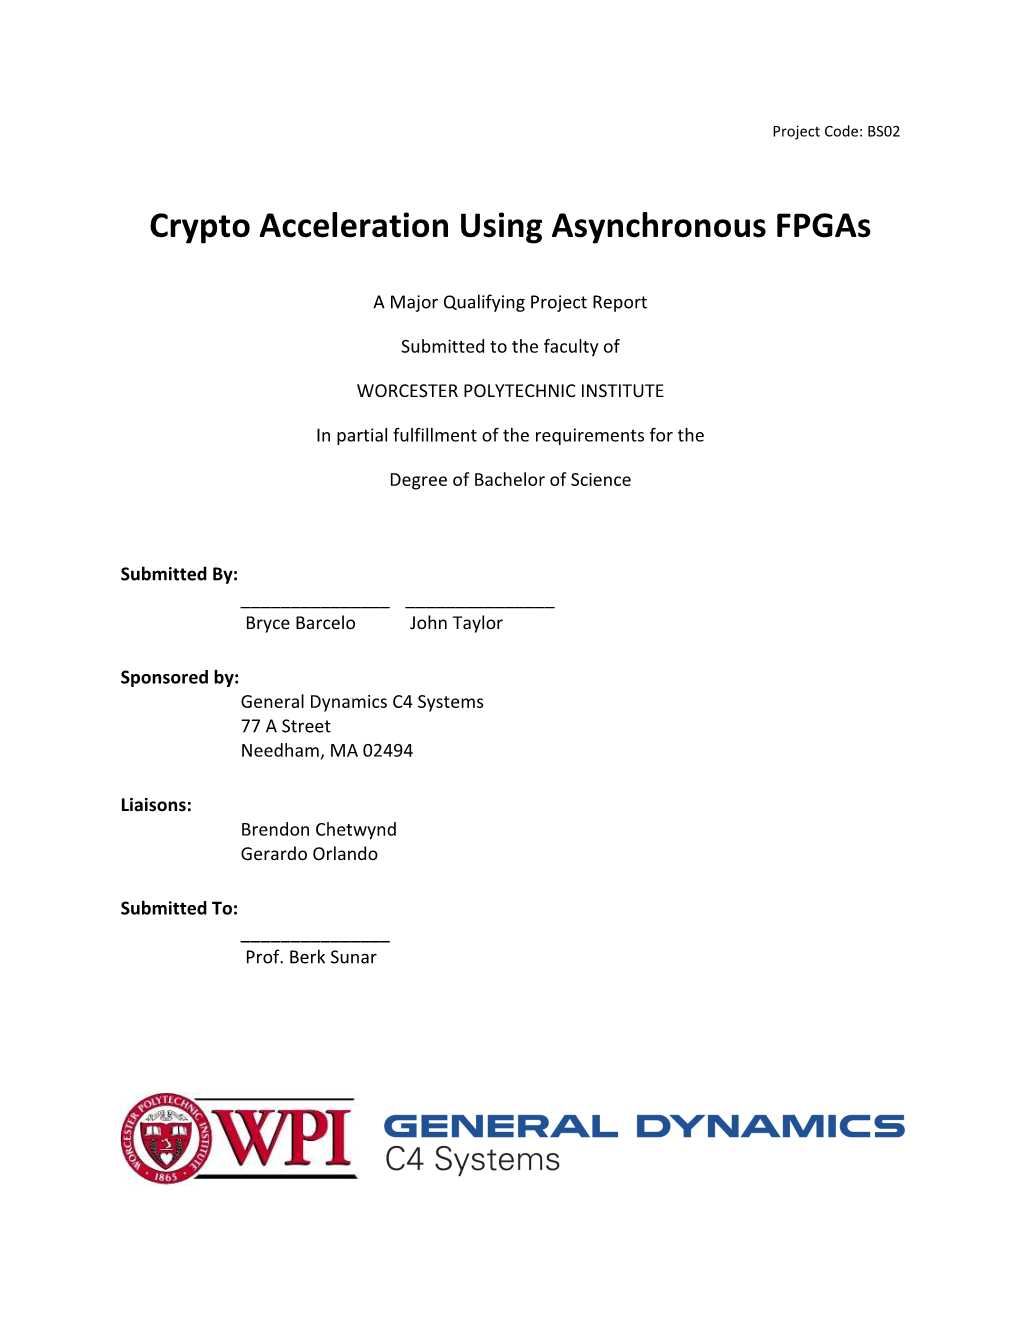 Crypto Acceleration Using Asynchronous Fpgas